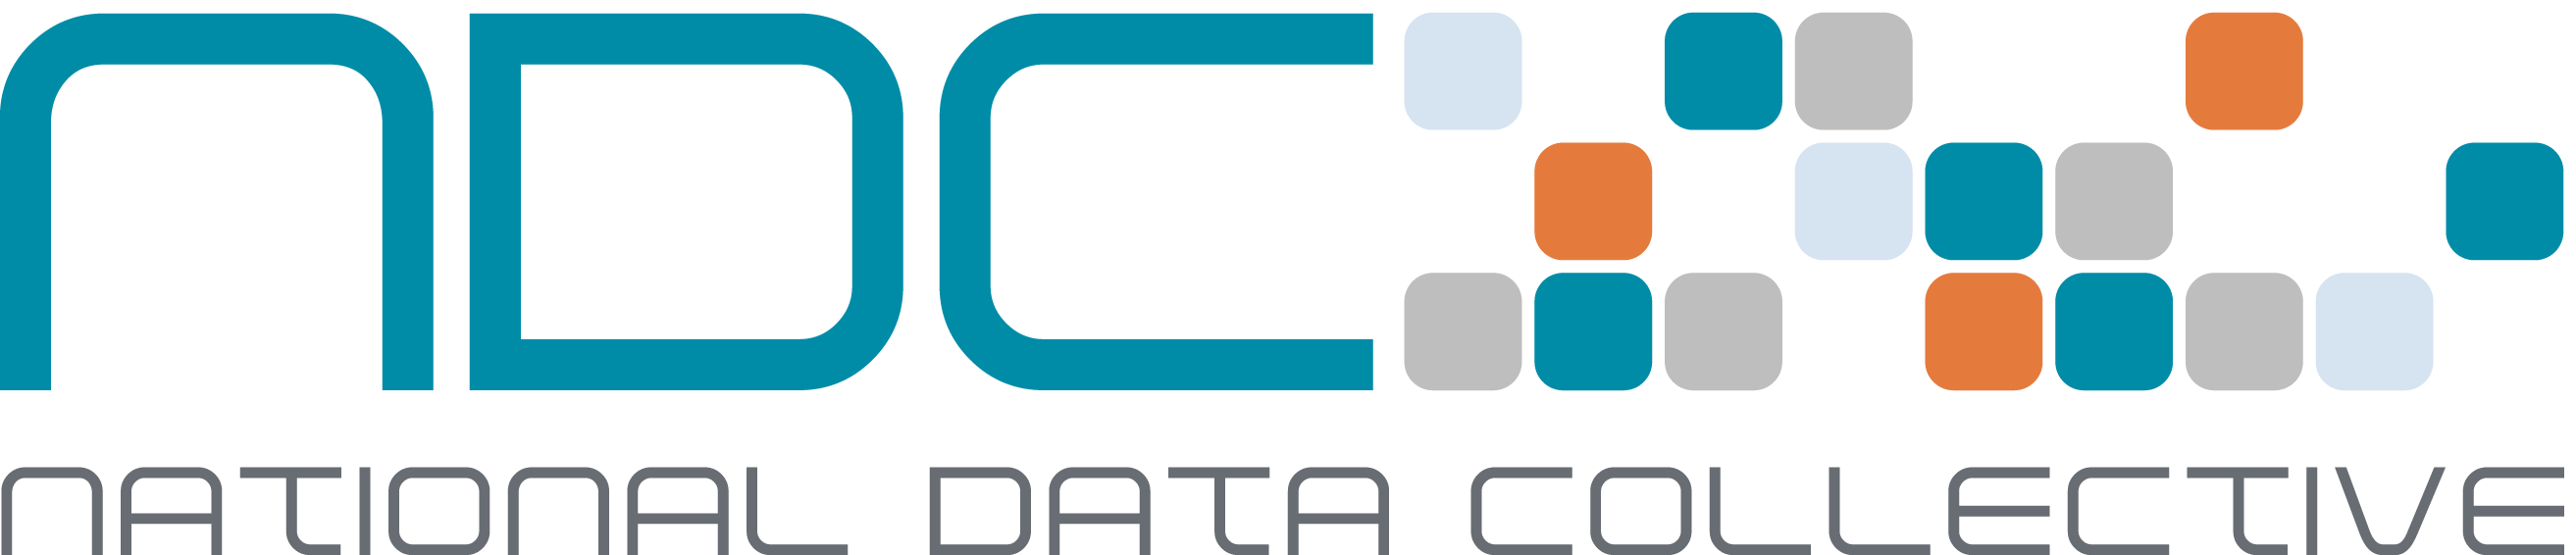 National Data Collective (NDC) Logo